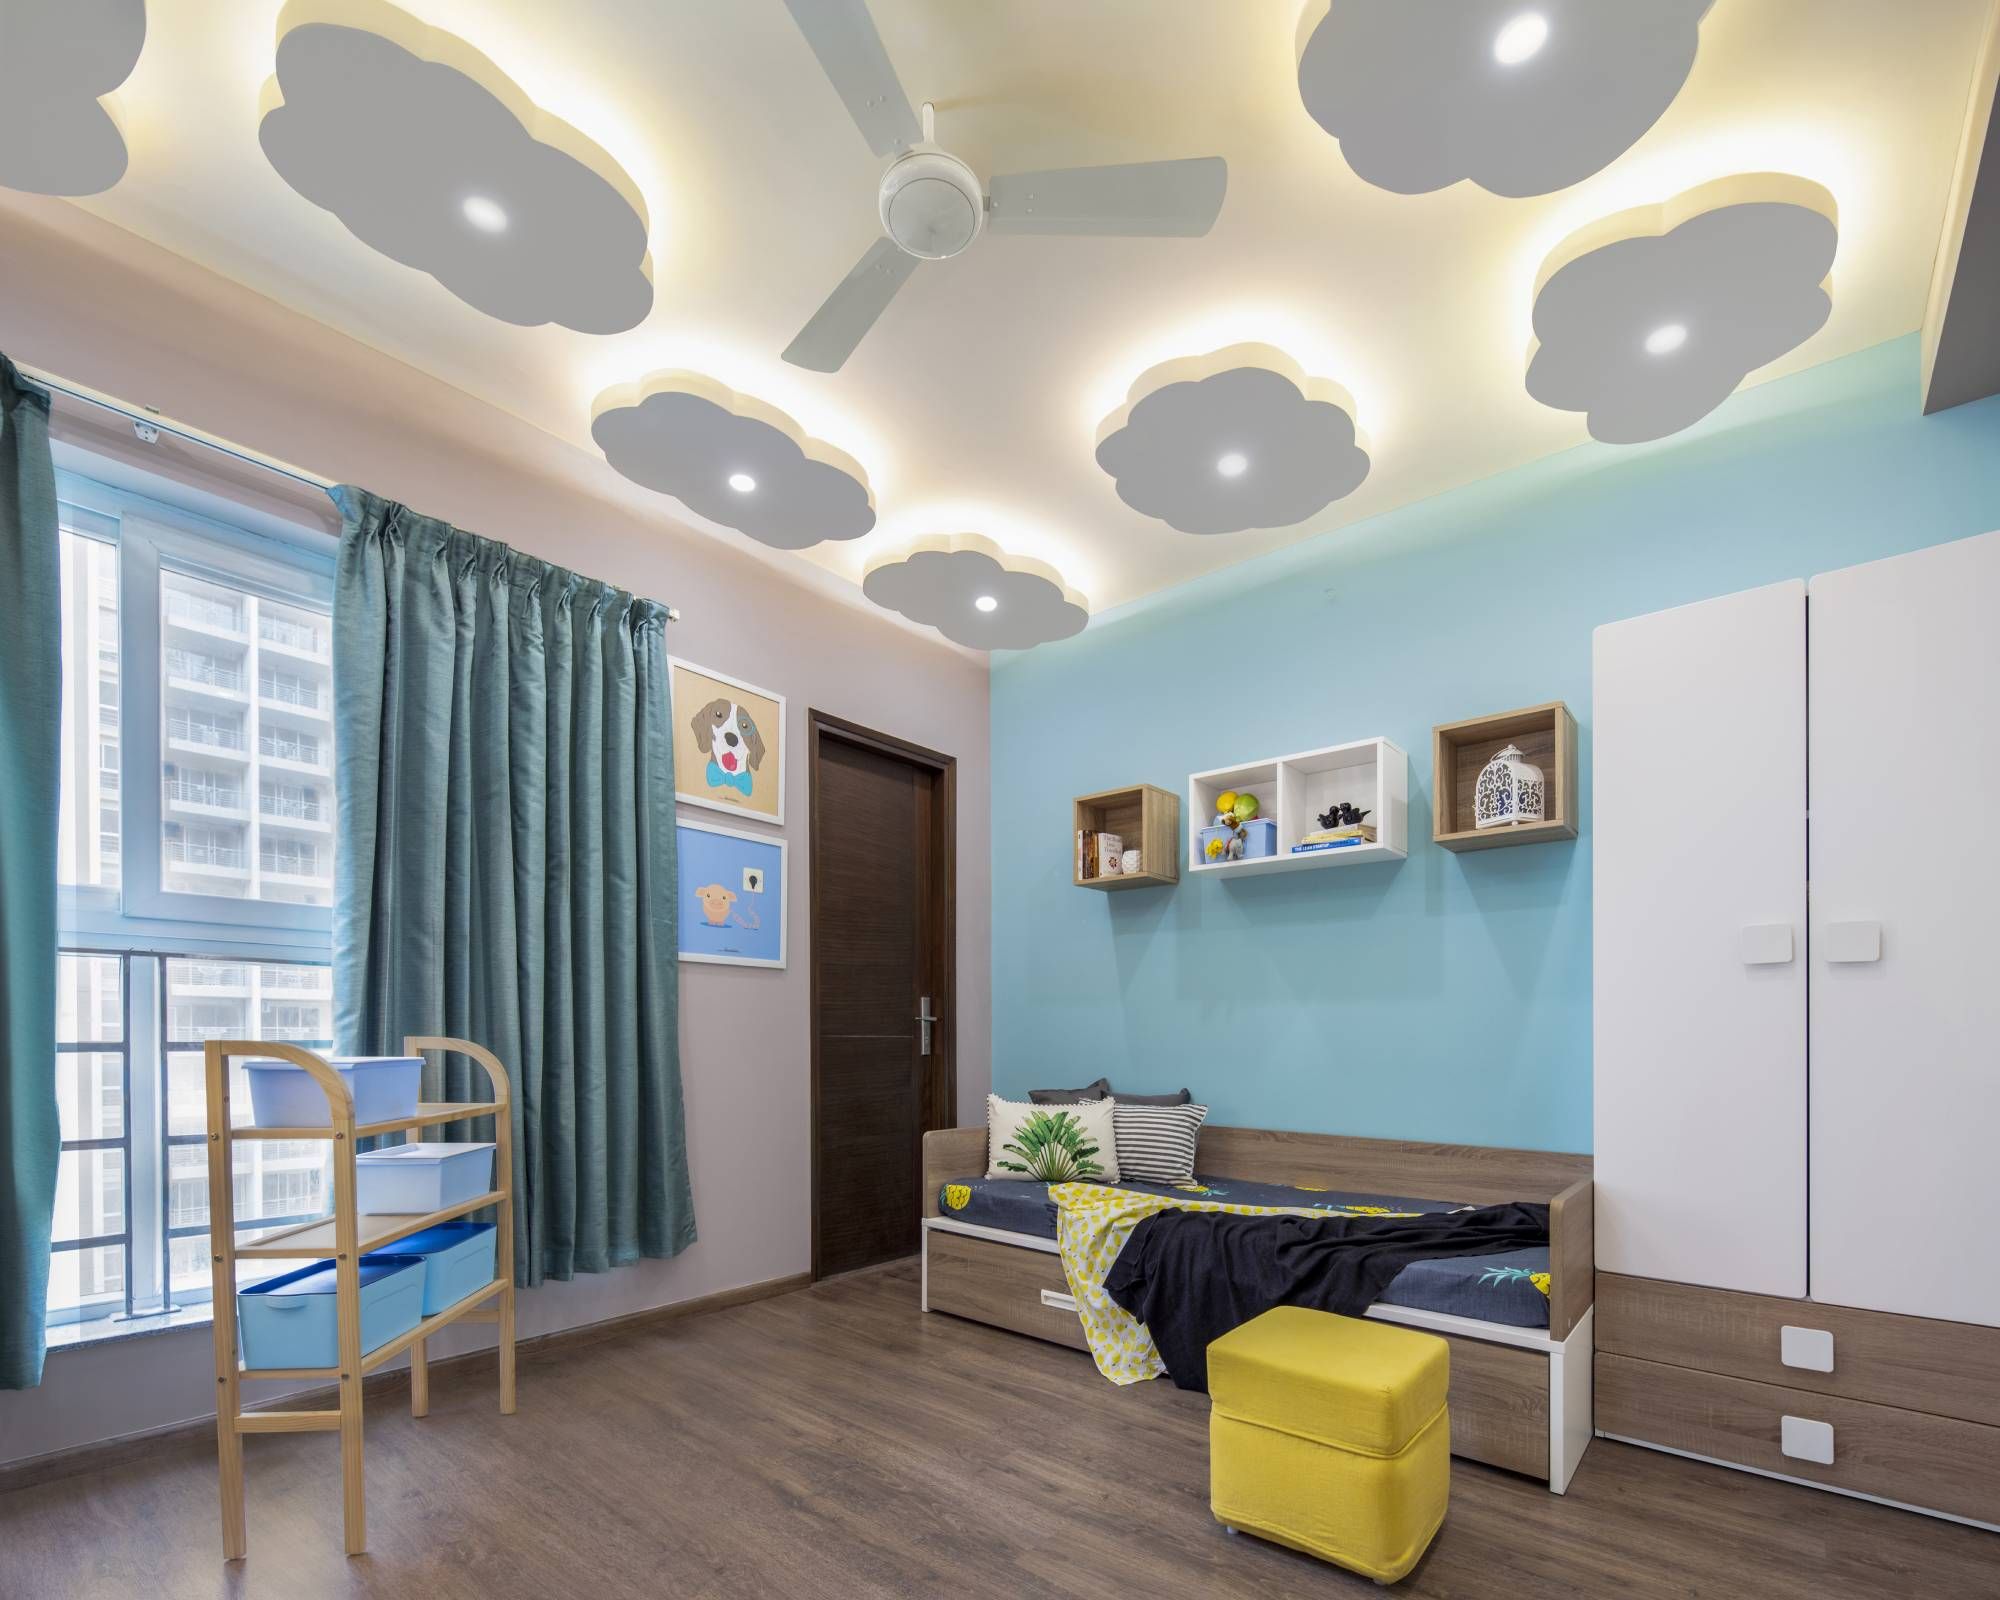 Modern Kid's Room Design With Cloud-Shaped False Ceiling